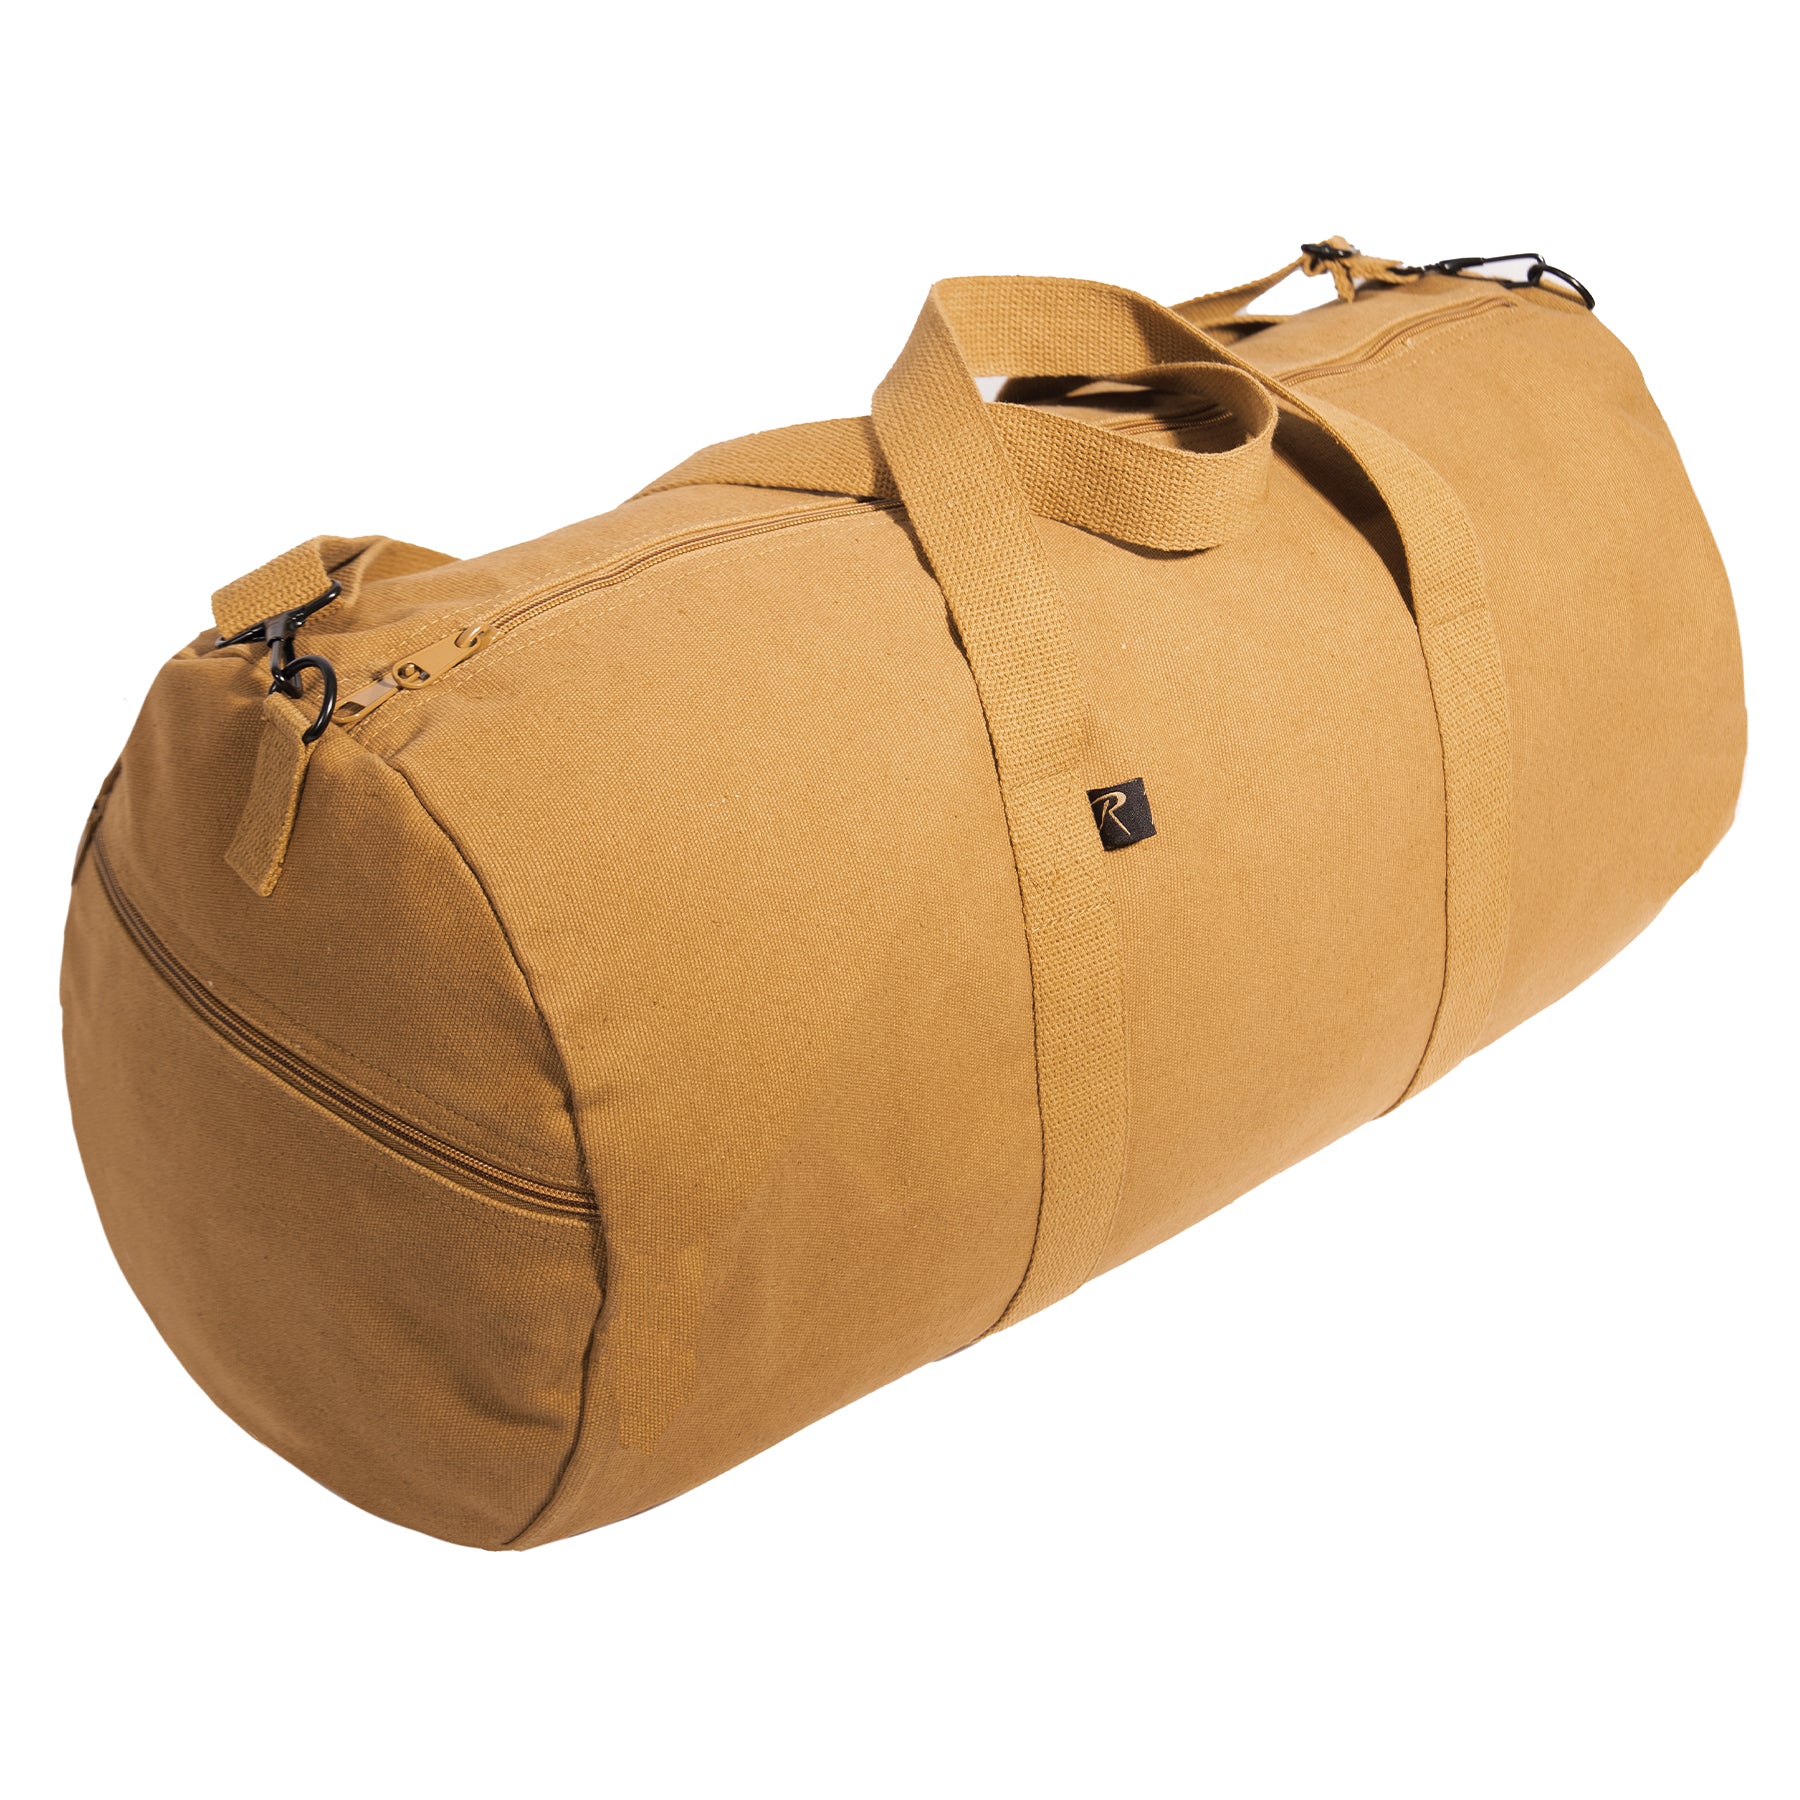 Milspec Canvas Shoulder Duffle Bag - 24 Inch Messenger & Shoulder Bags MilTac Tactical Military Outdoor Gear Australia